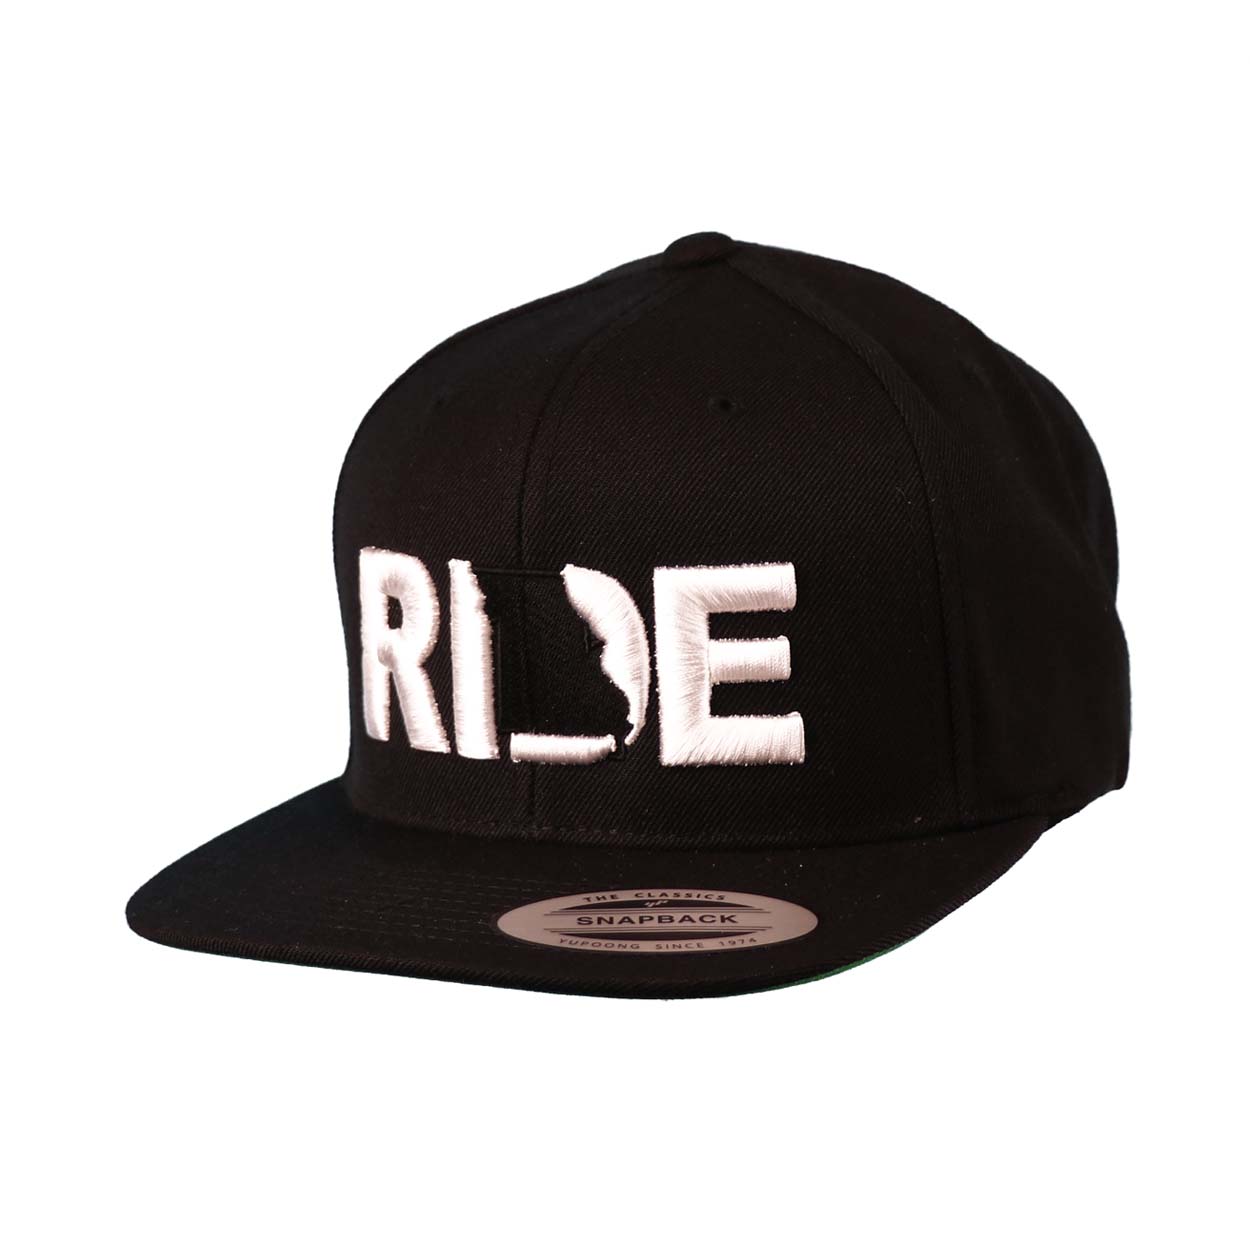 Ride Missouri Classic Embroidered  Snapback Flat Brim Hat Black